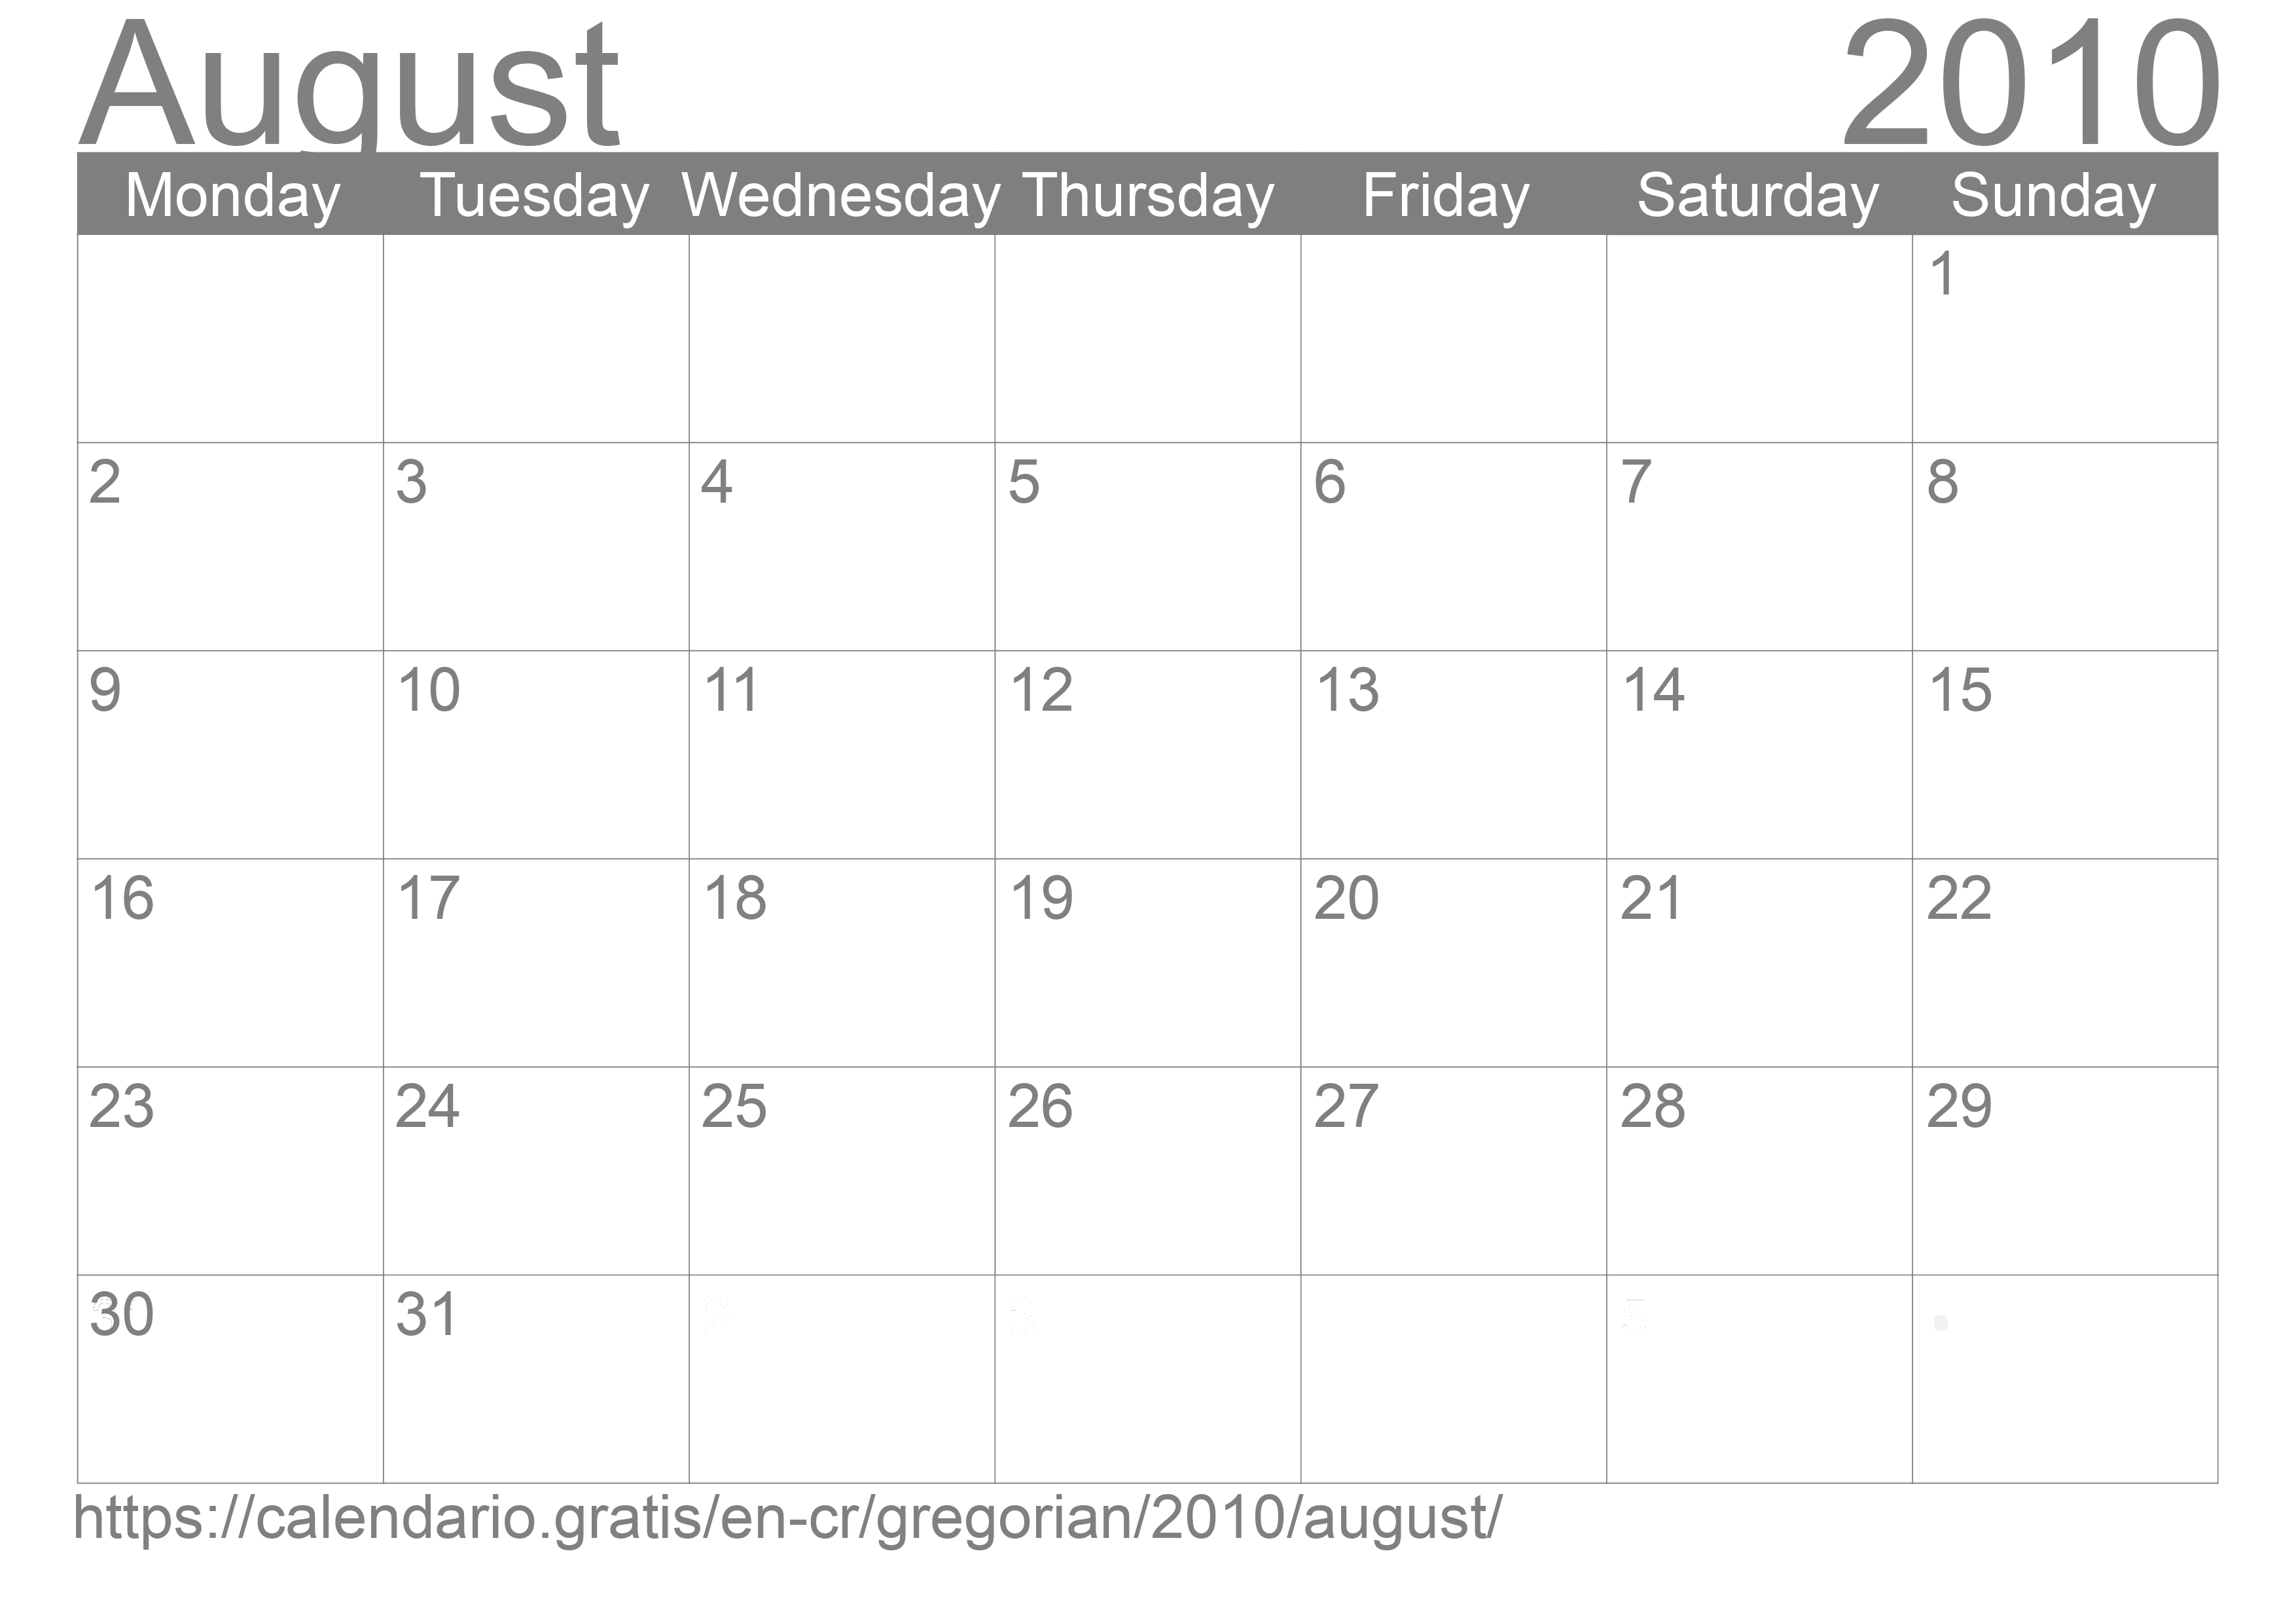 Calendar August 2010 to print